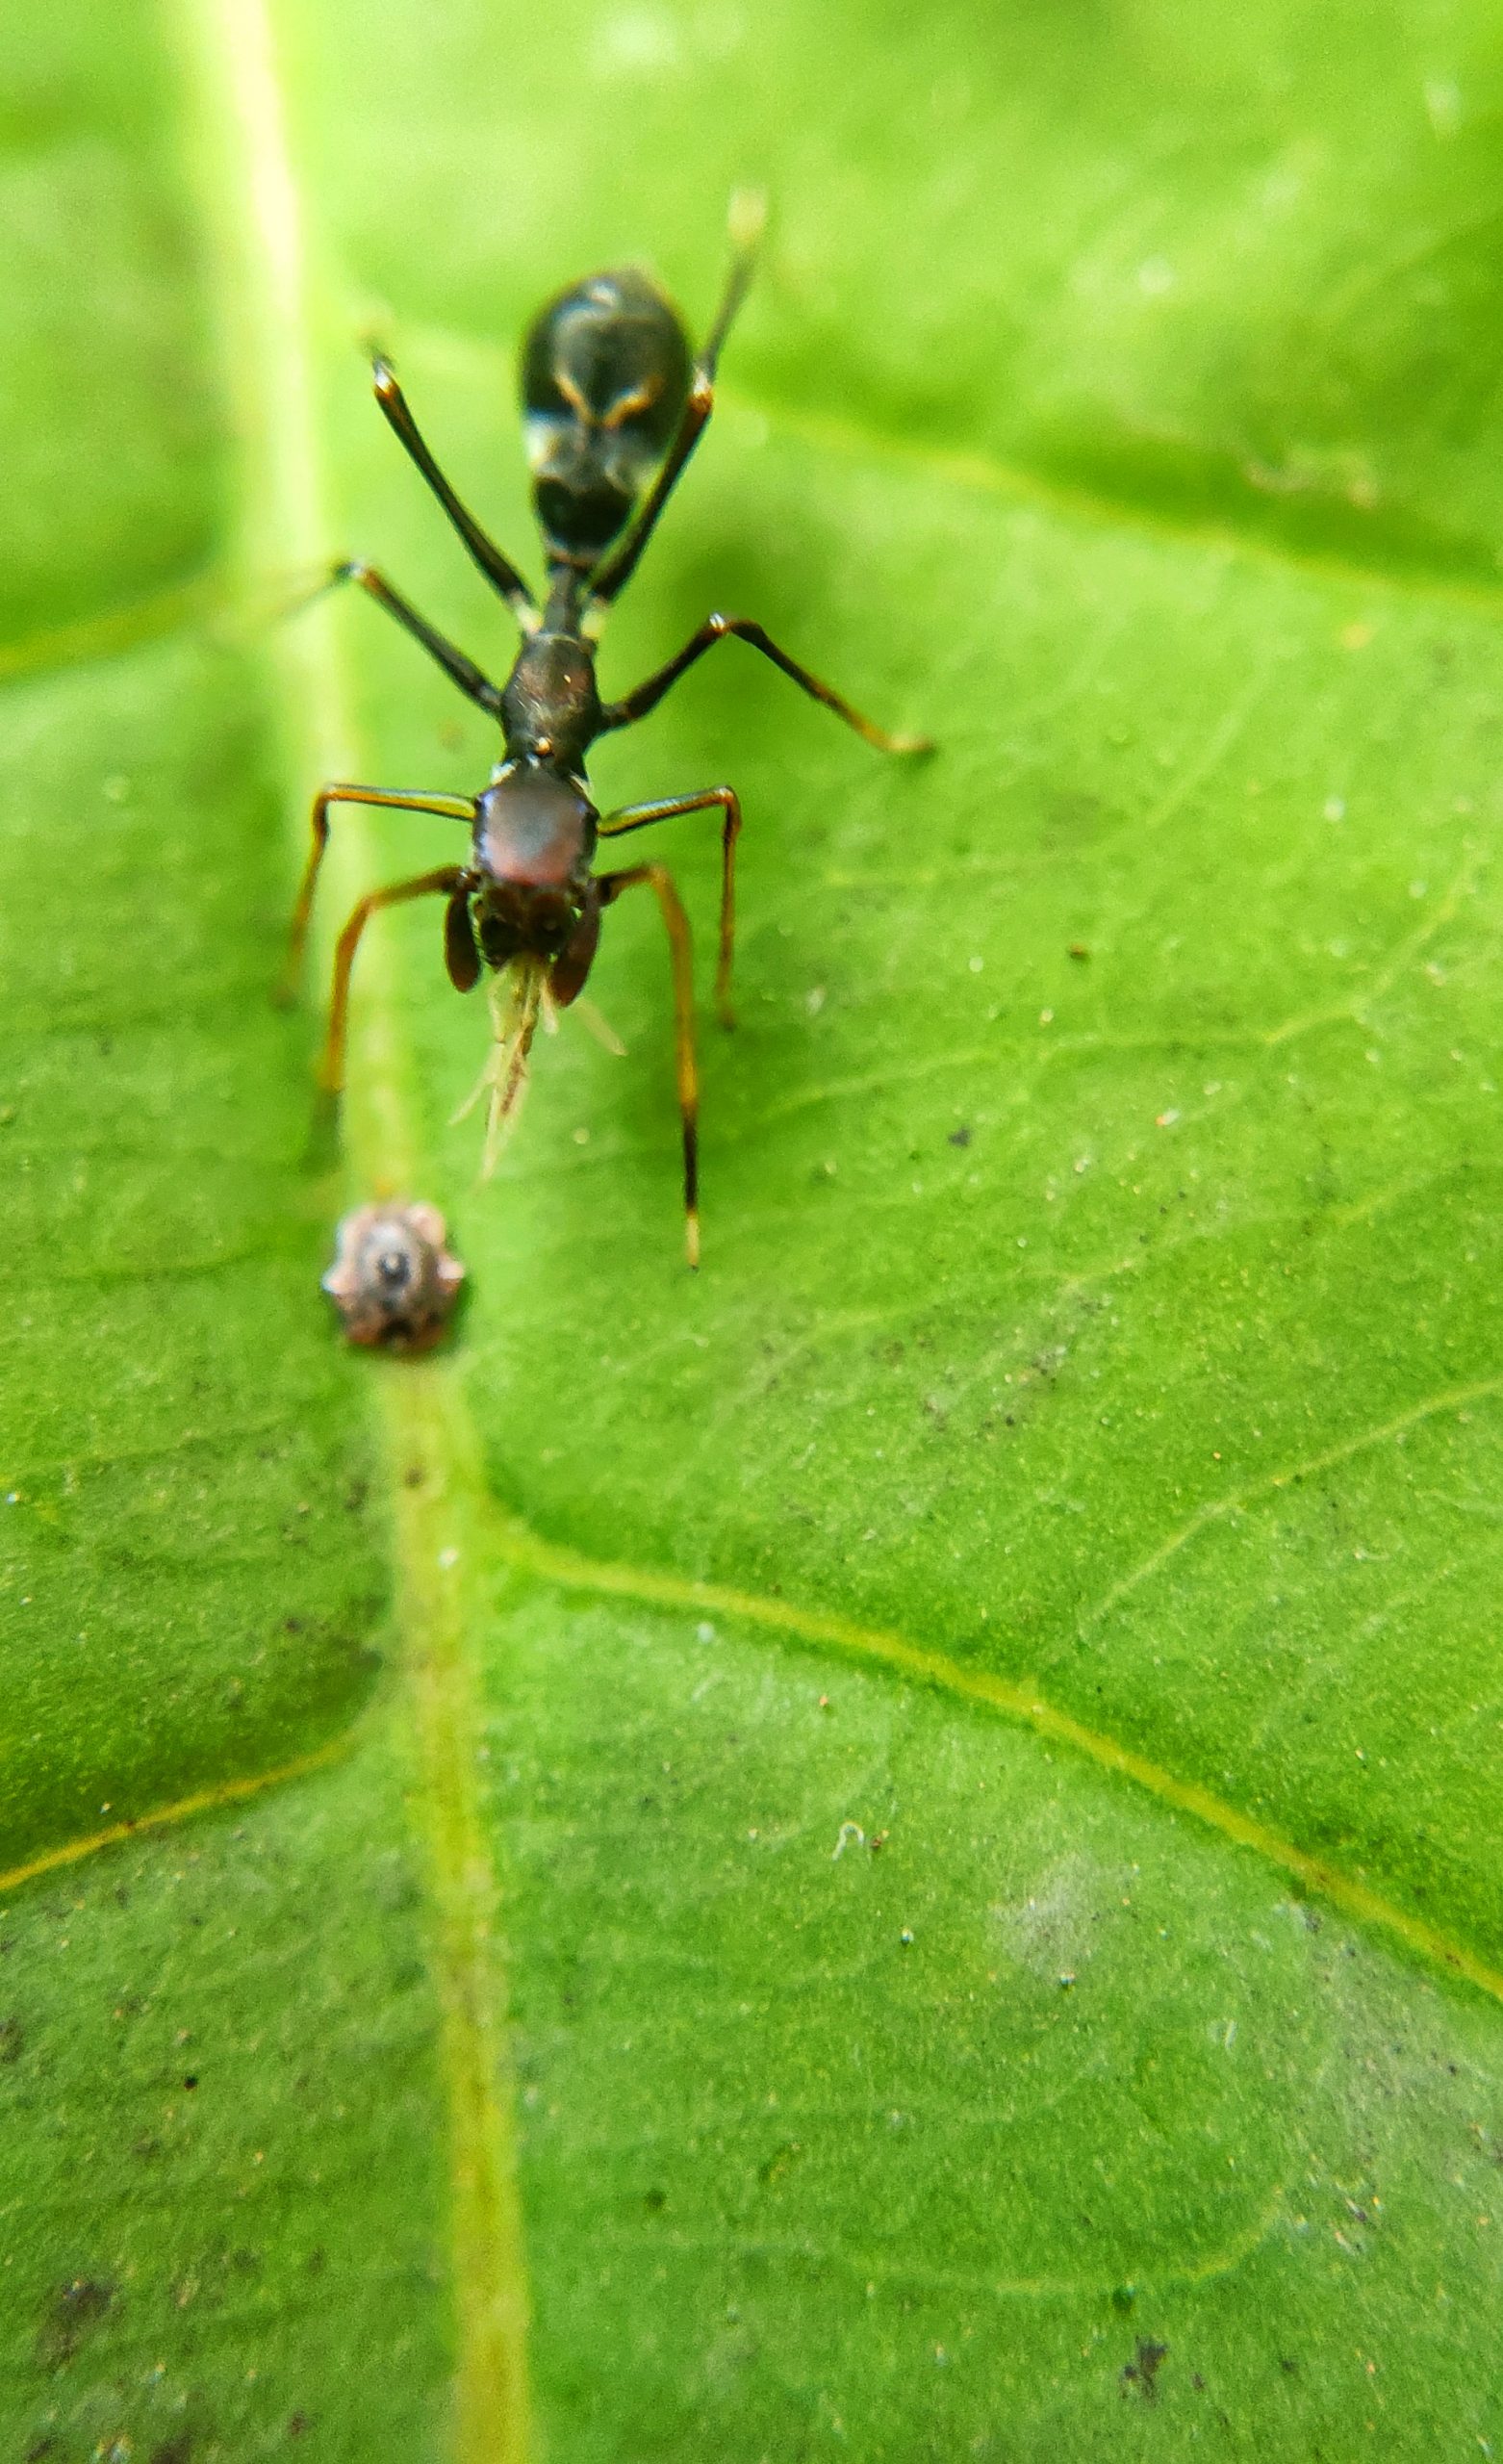 An ant on a leaf